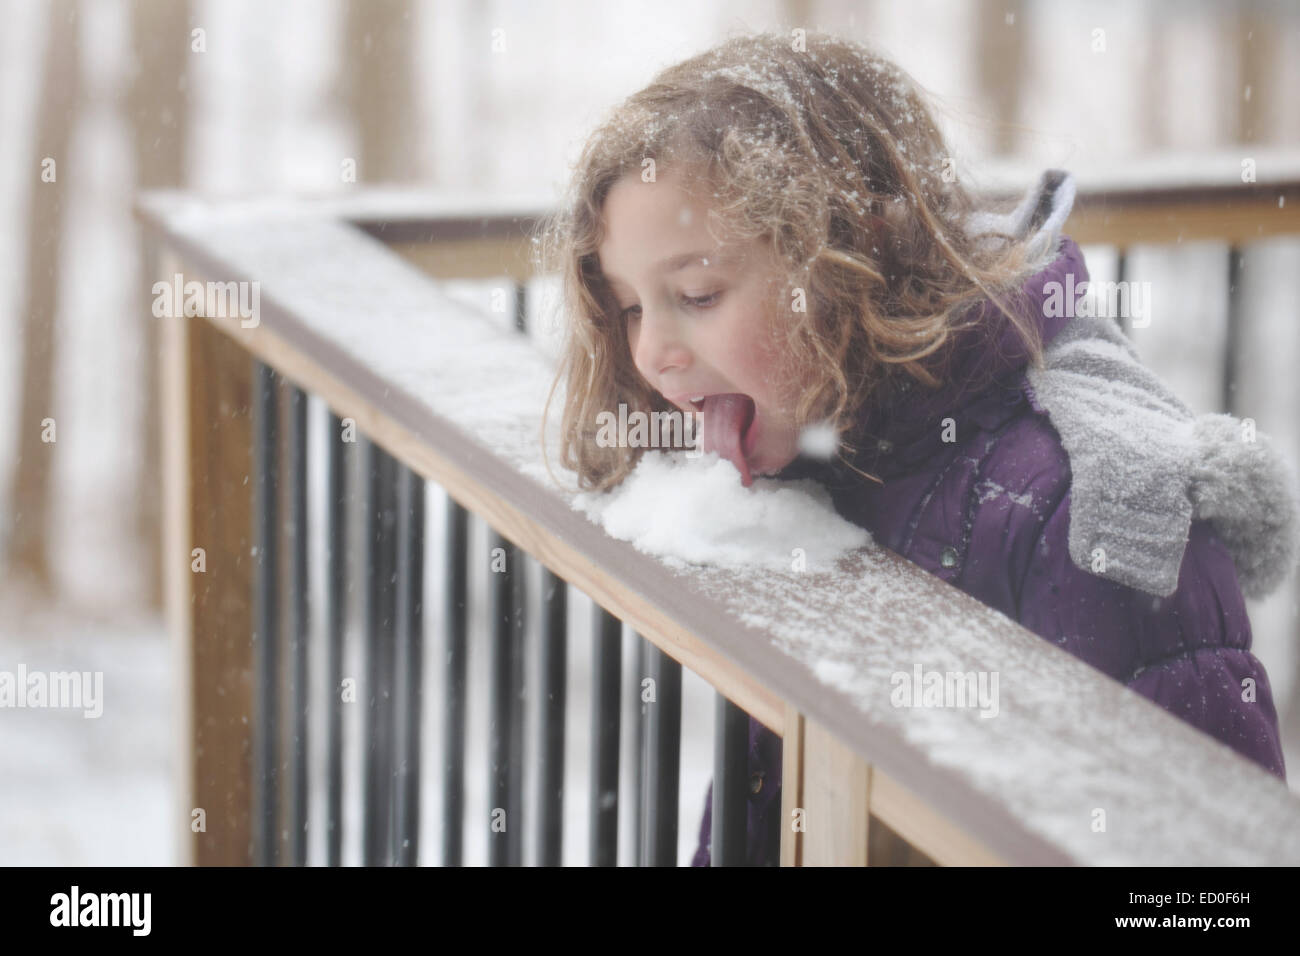 Girl (6-7) licking snow Stock Photo